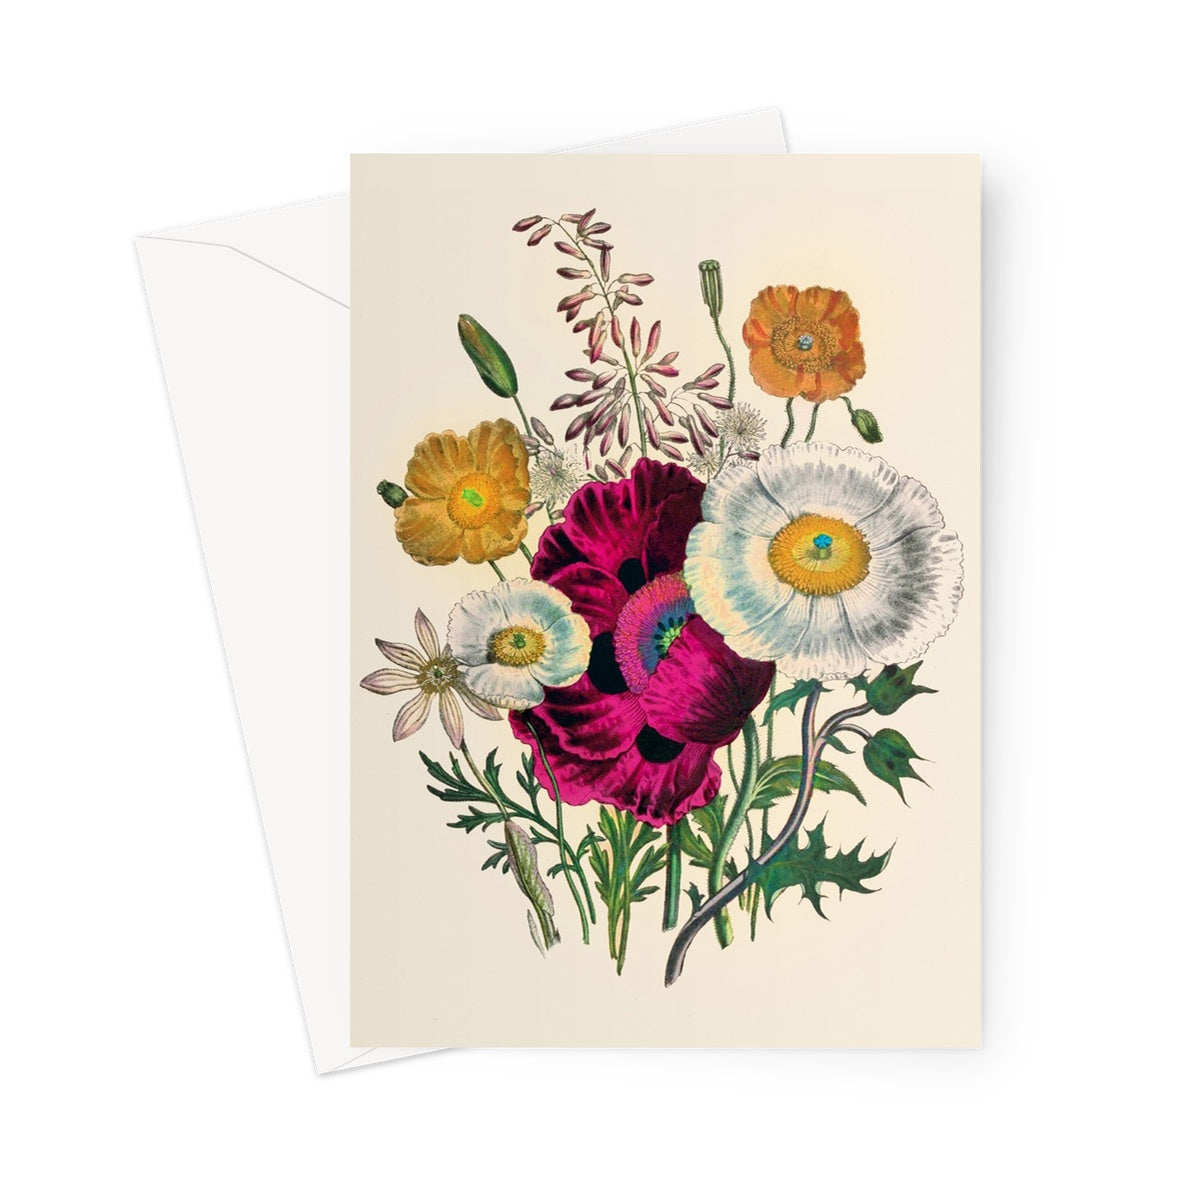 Floral Anemone greetings card. vintage illustration floral card. 